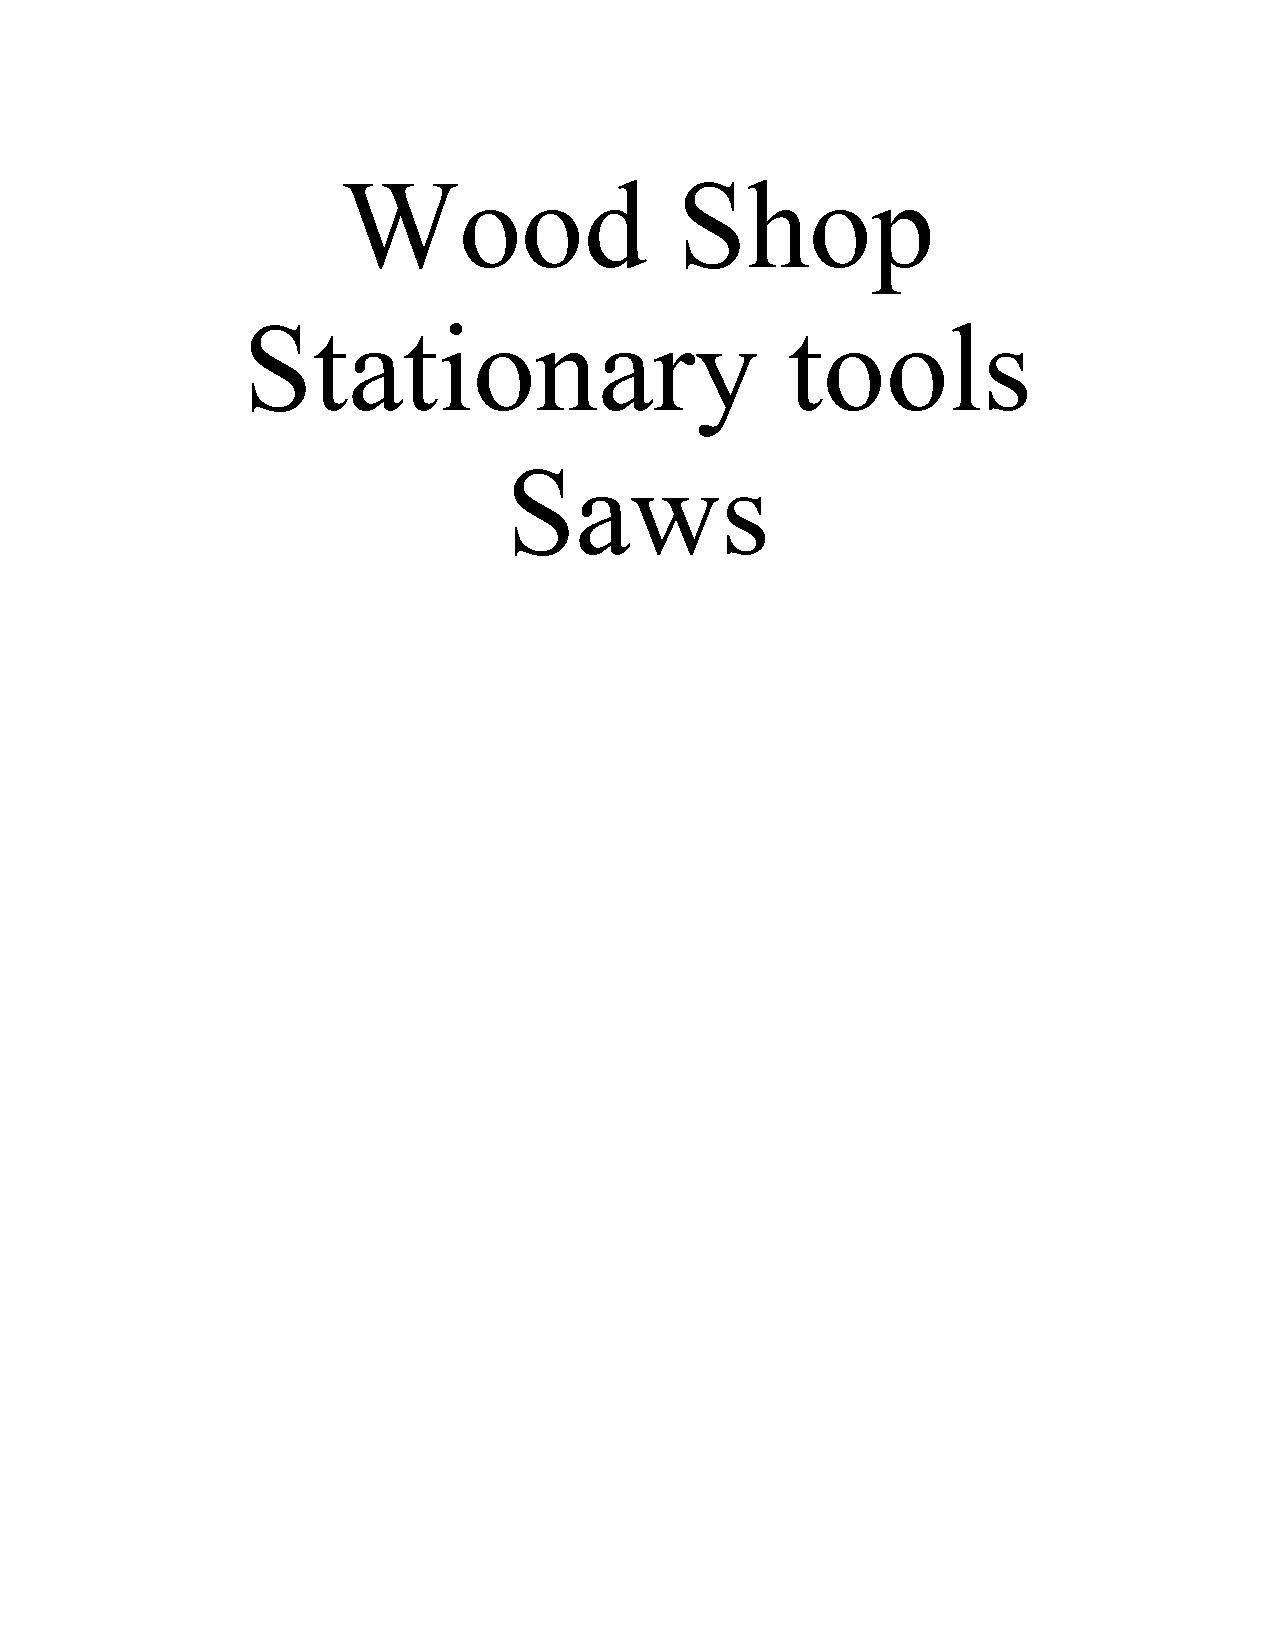 Wood Stationary Saws.pdf